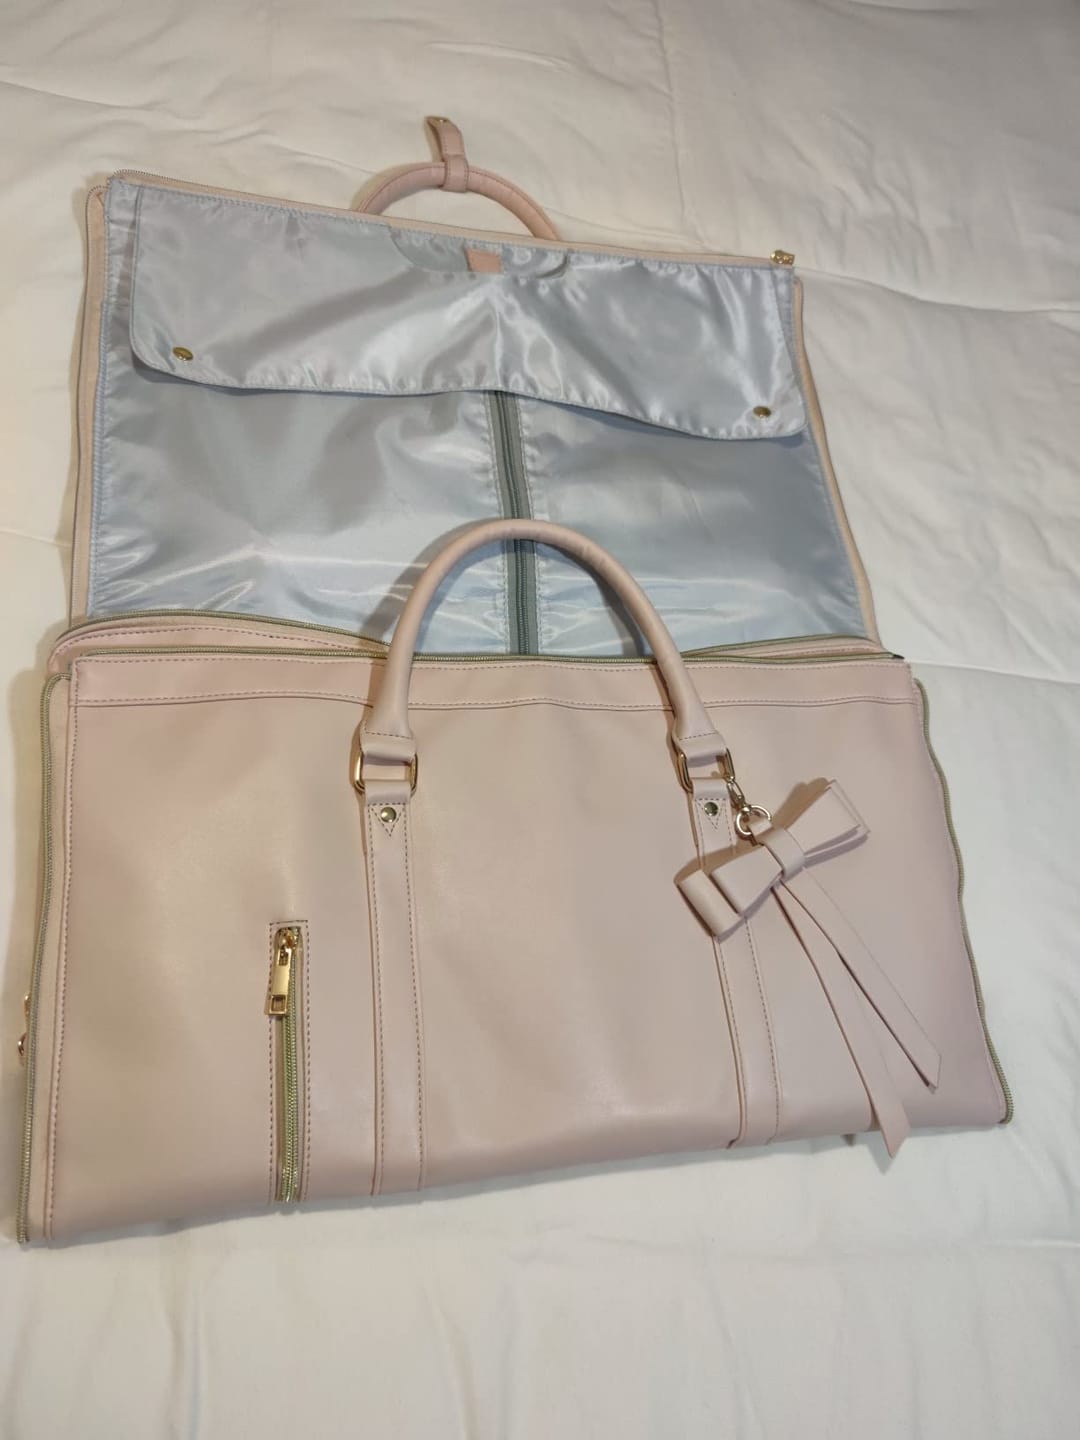 VAULTBAG - Foldable Leather Travel Bag